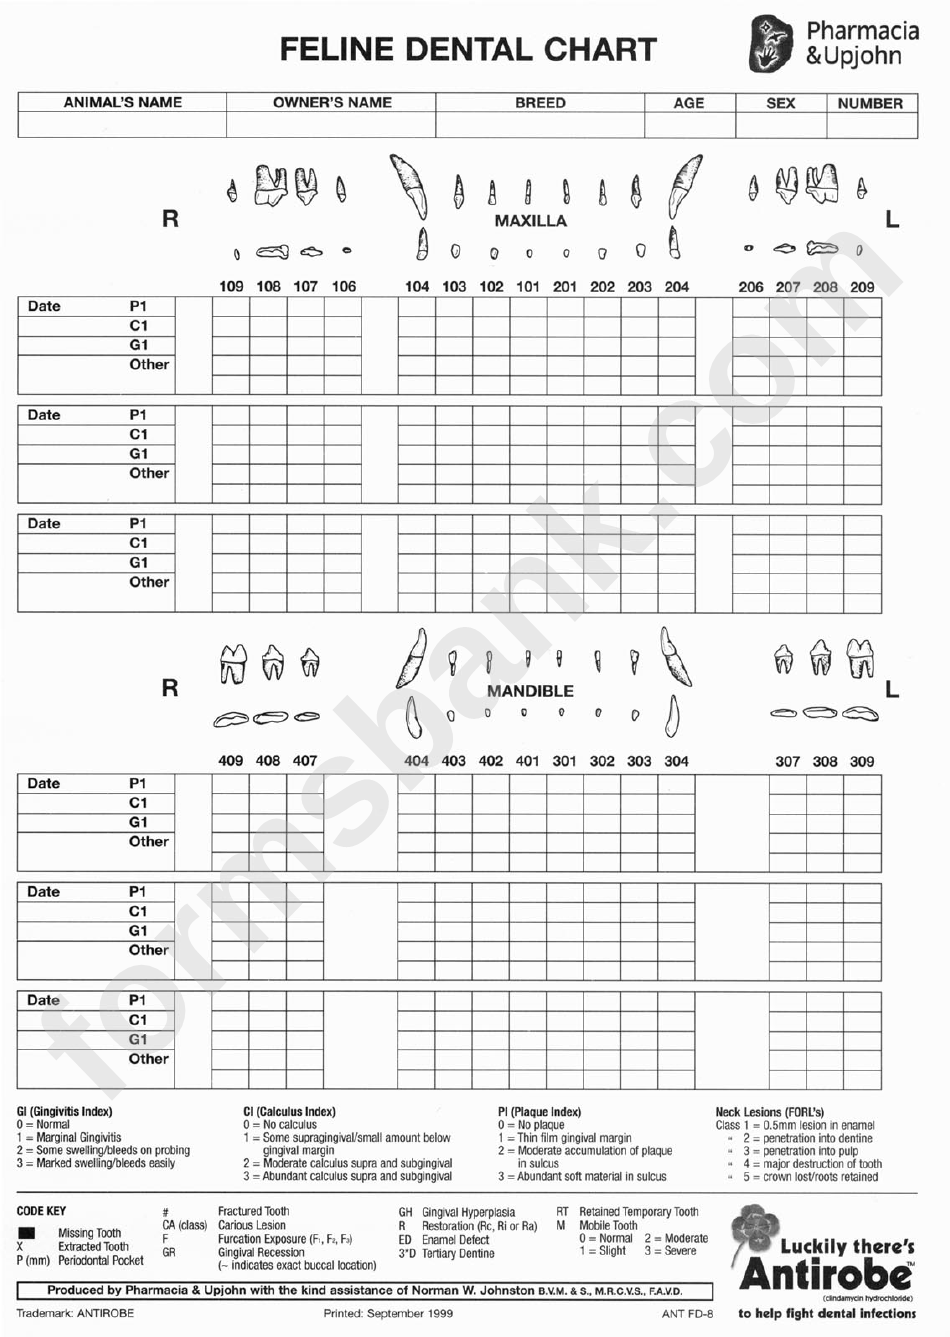 Feline Dental Chart printable pdf download